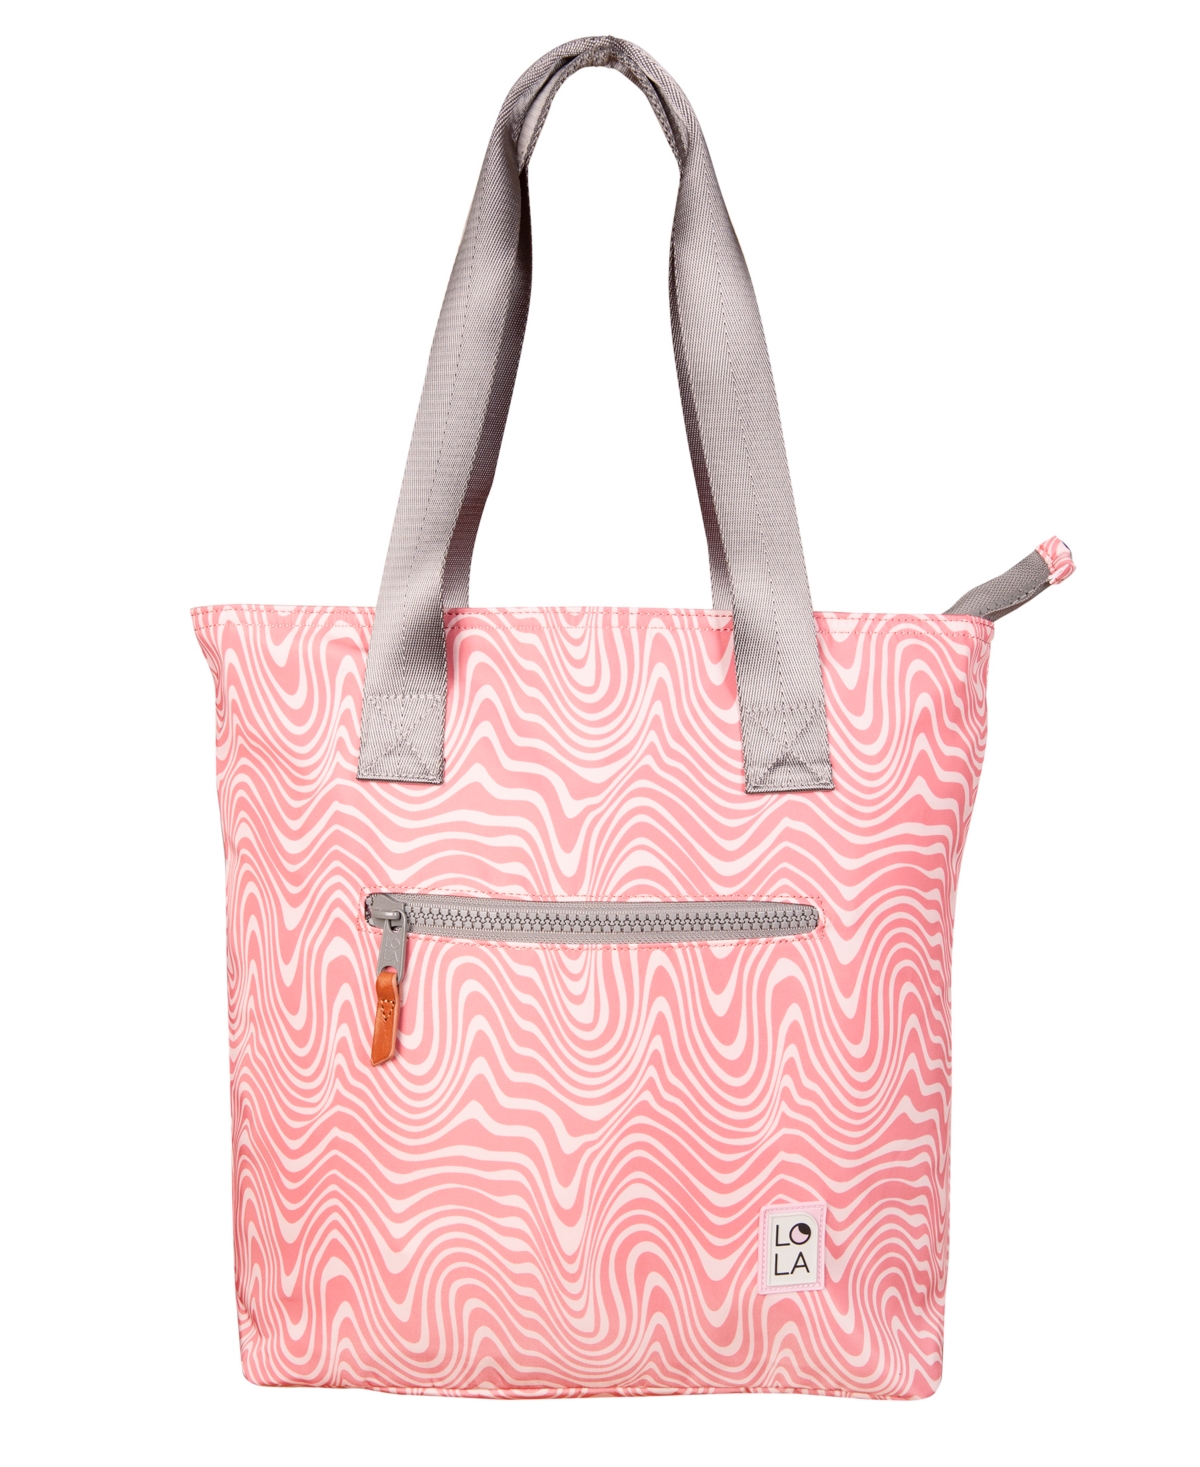 Lola Carryall Large Tote Bag In Pink